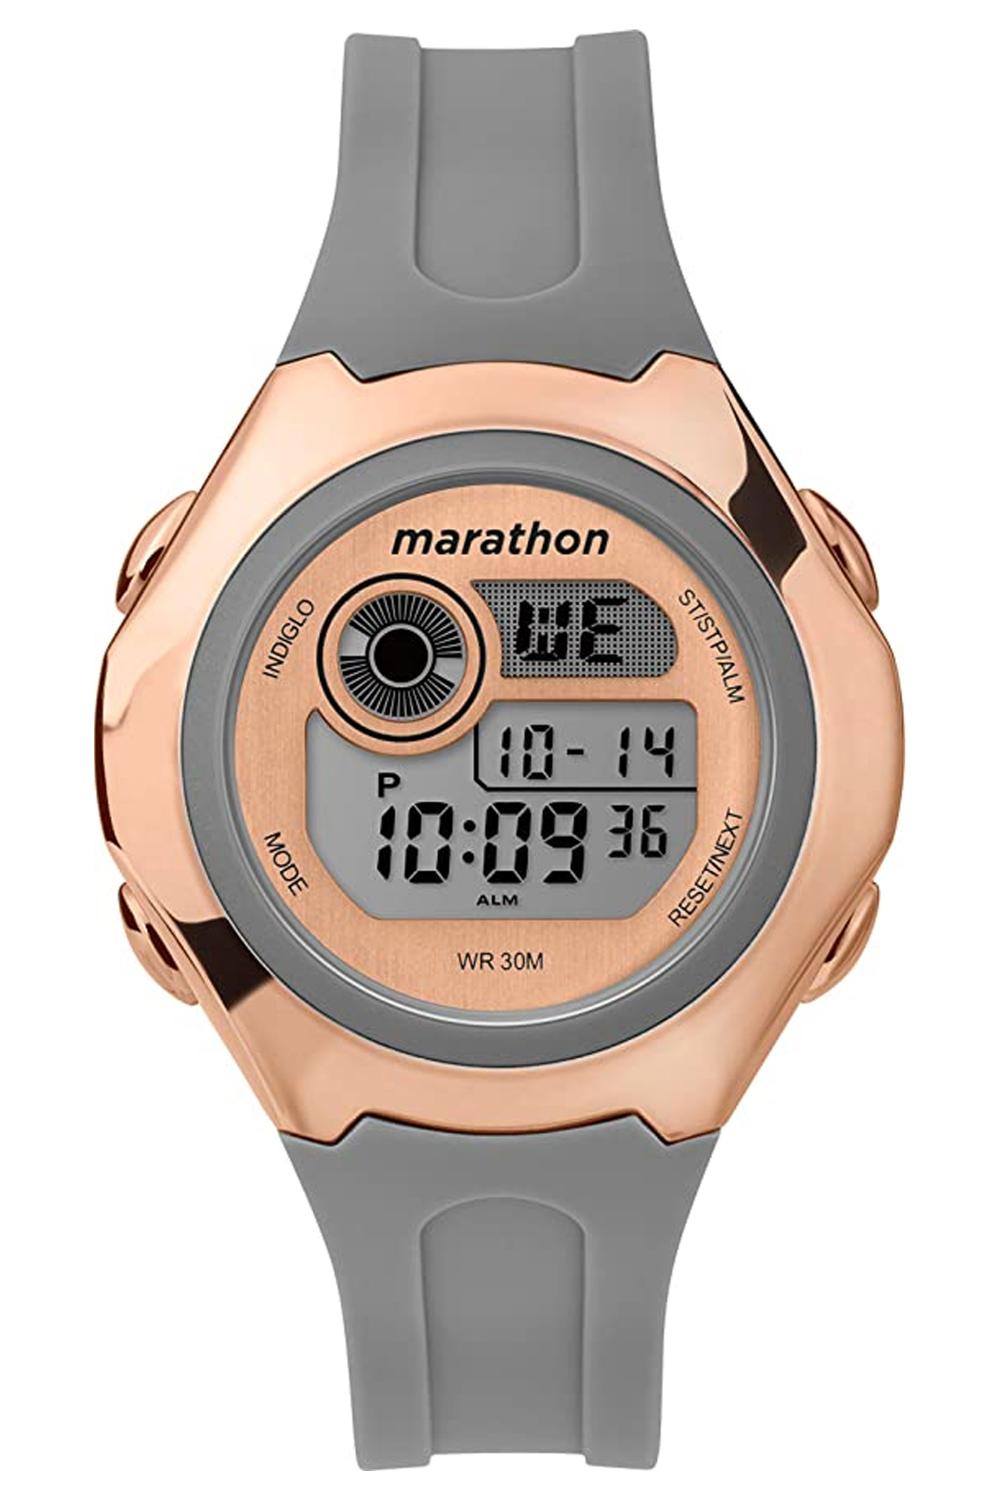 Timex Women's Marathon Digital Watch, Rose Gold and Gray